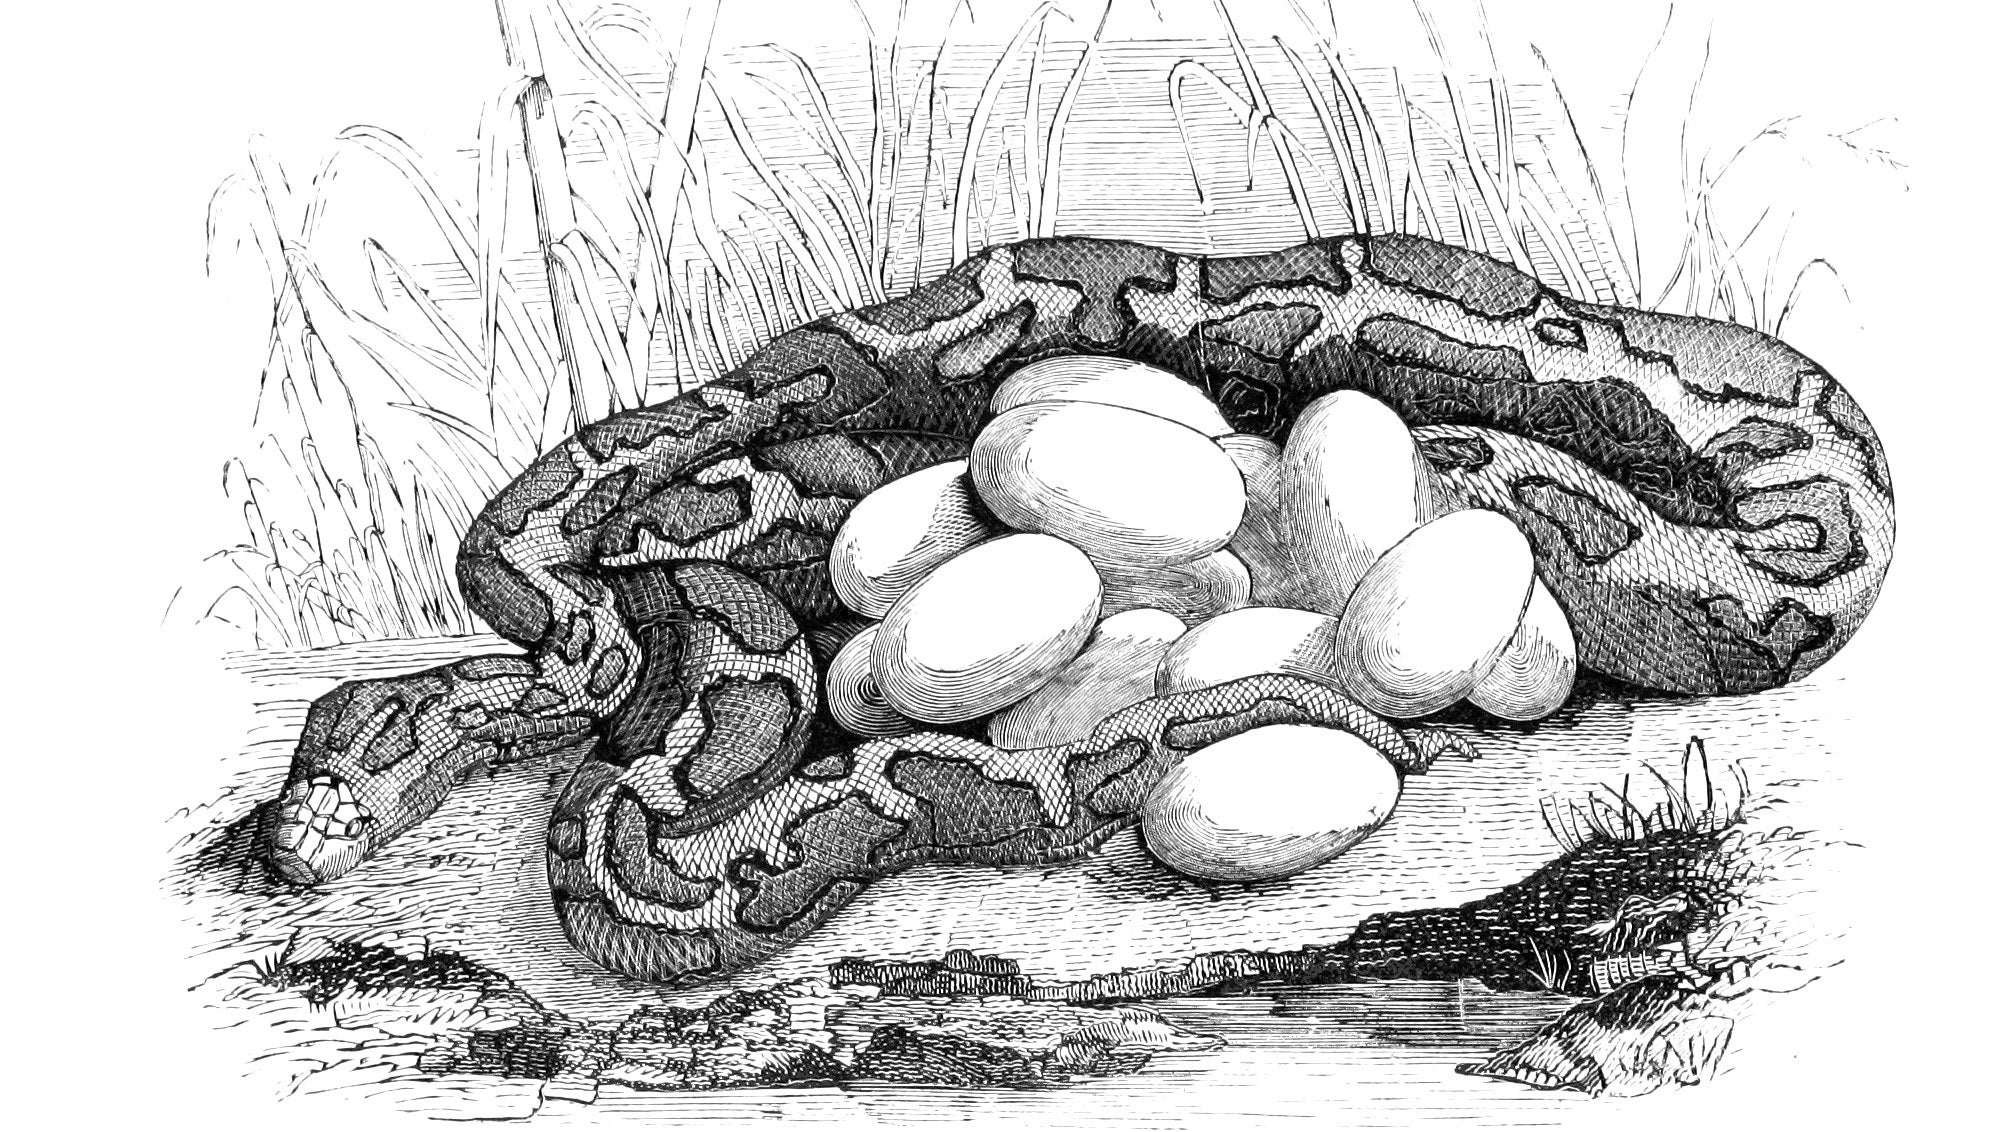 A python coiled around a clutch of eggs in an illustration from 'Los Héroes y las Maravillas del Mundo.'